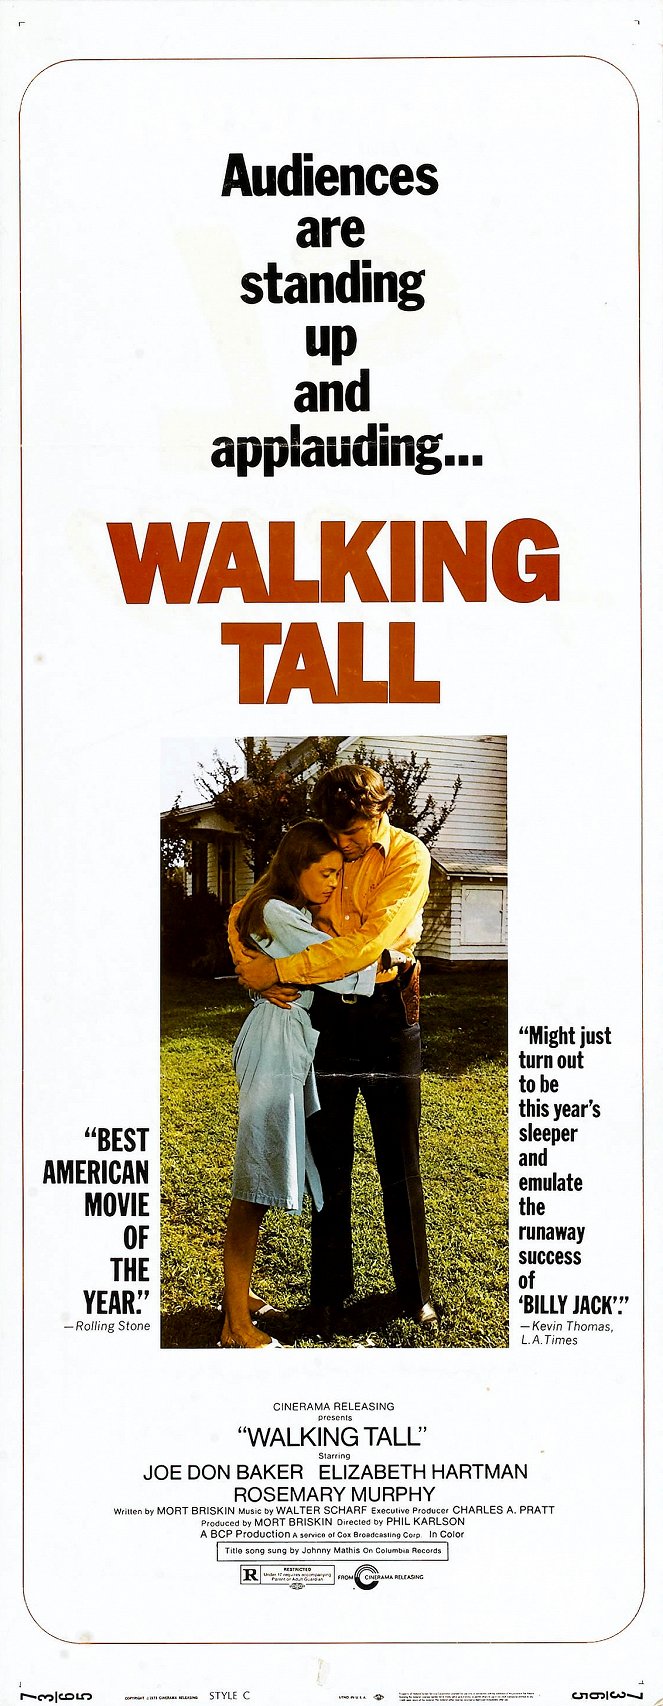 Walking Tall - Posters